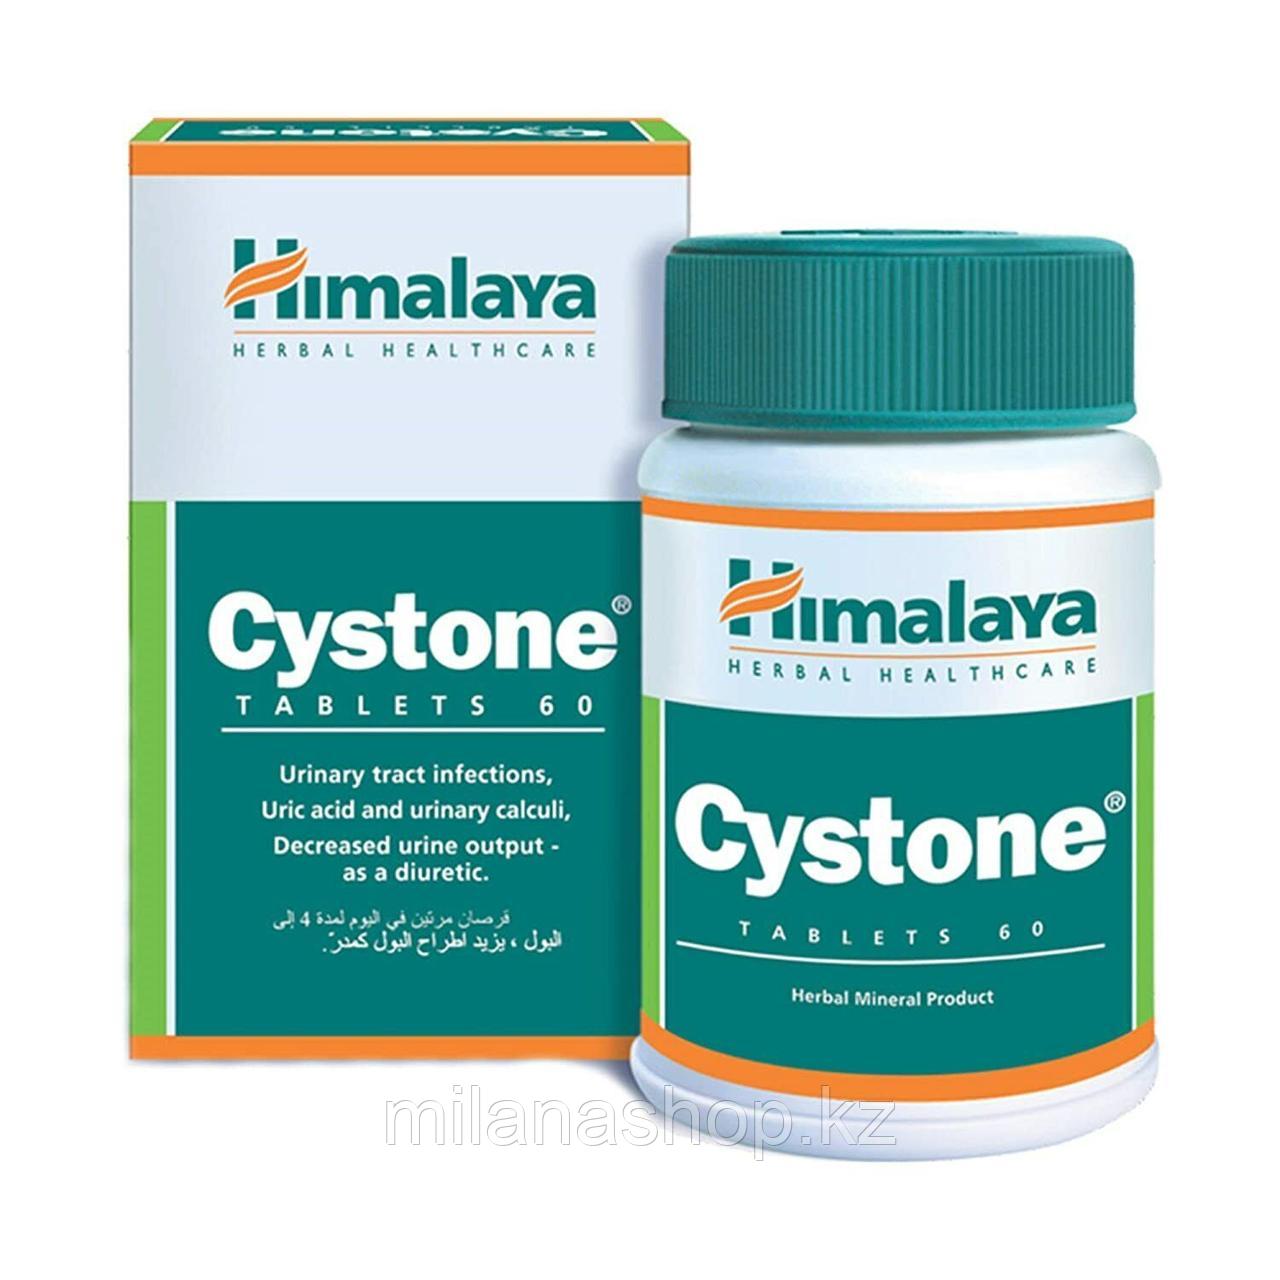 Цистон ( cystone himalaya ) лечение цистита и др.хронических инфекций)  60